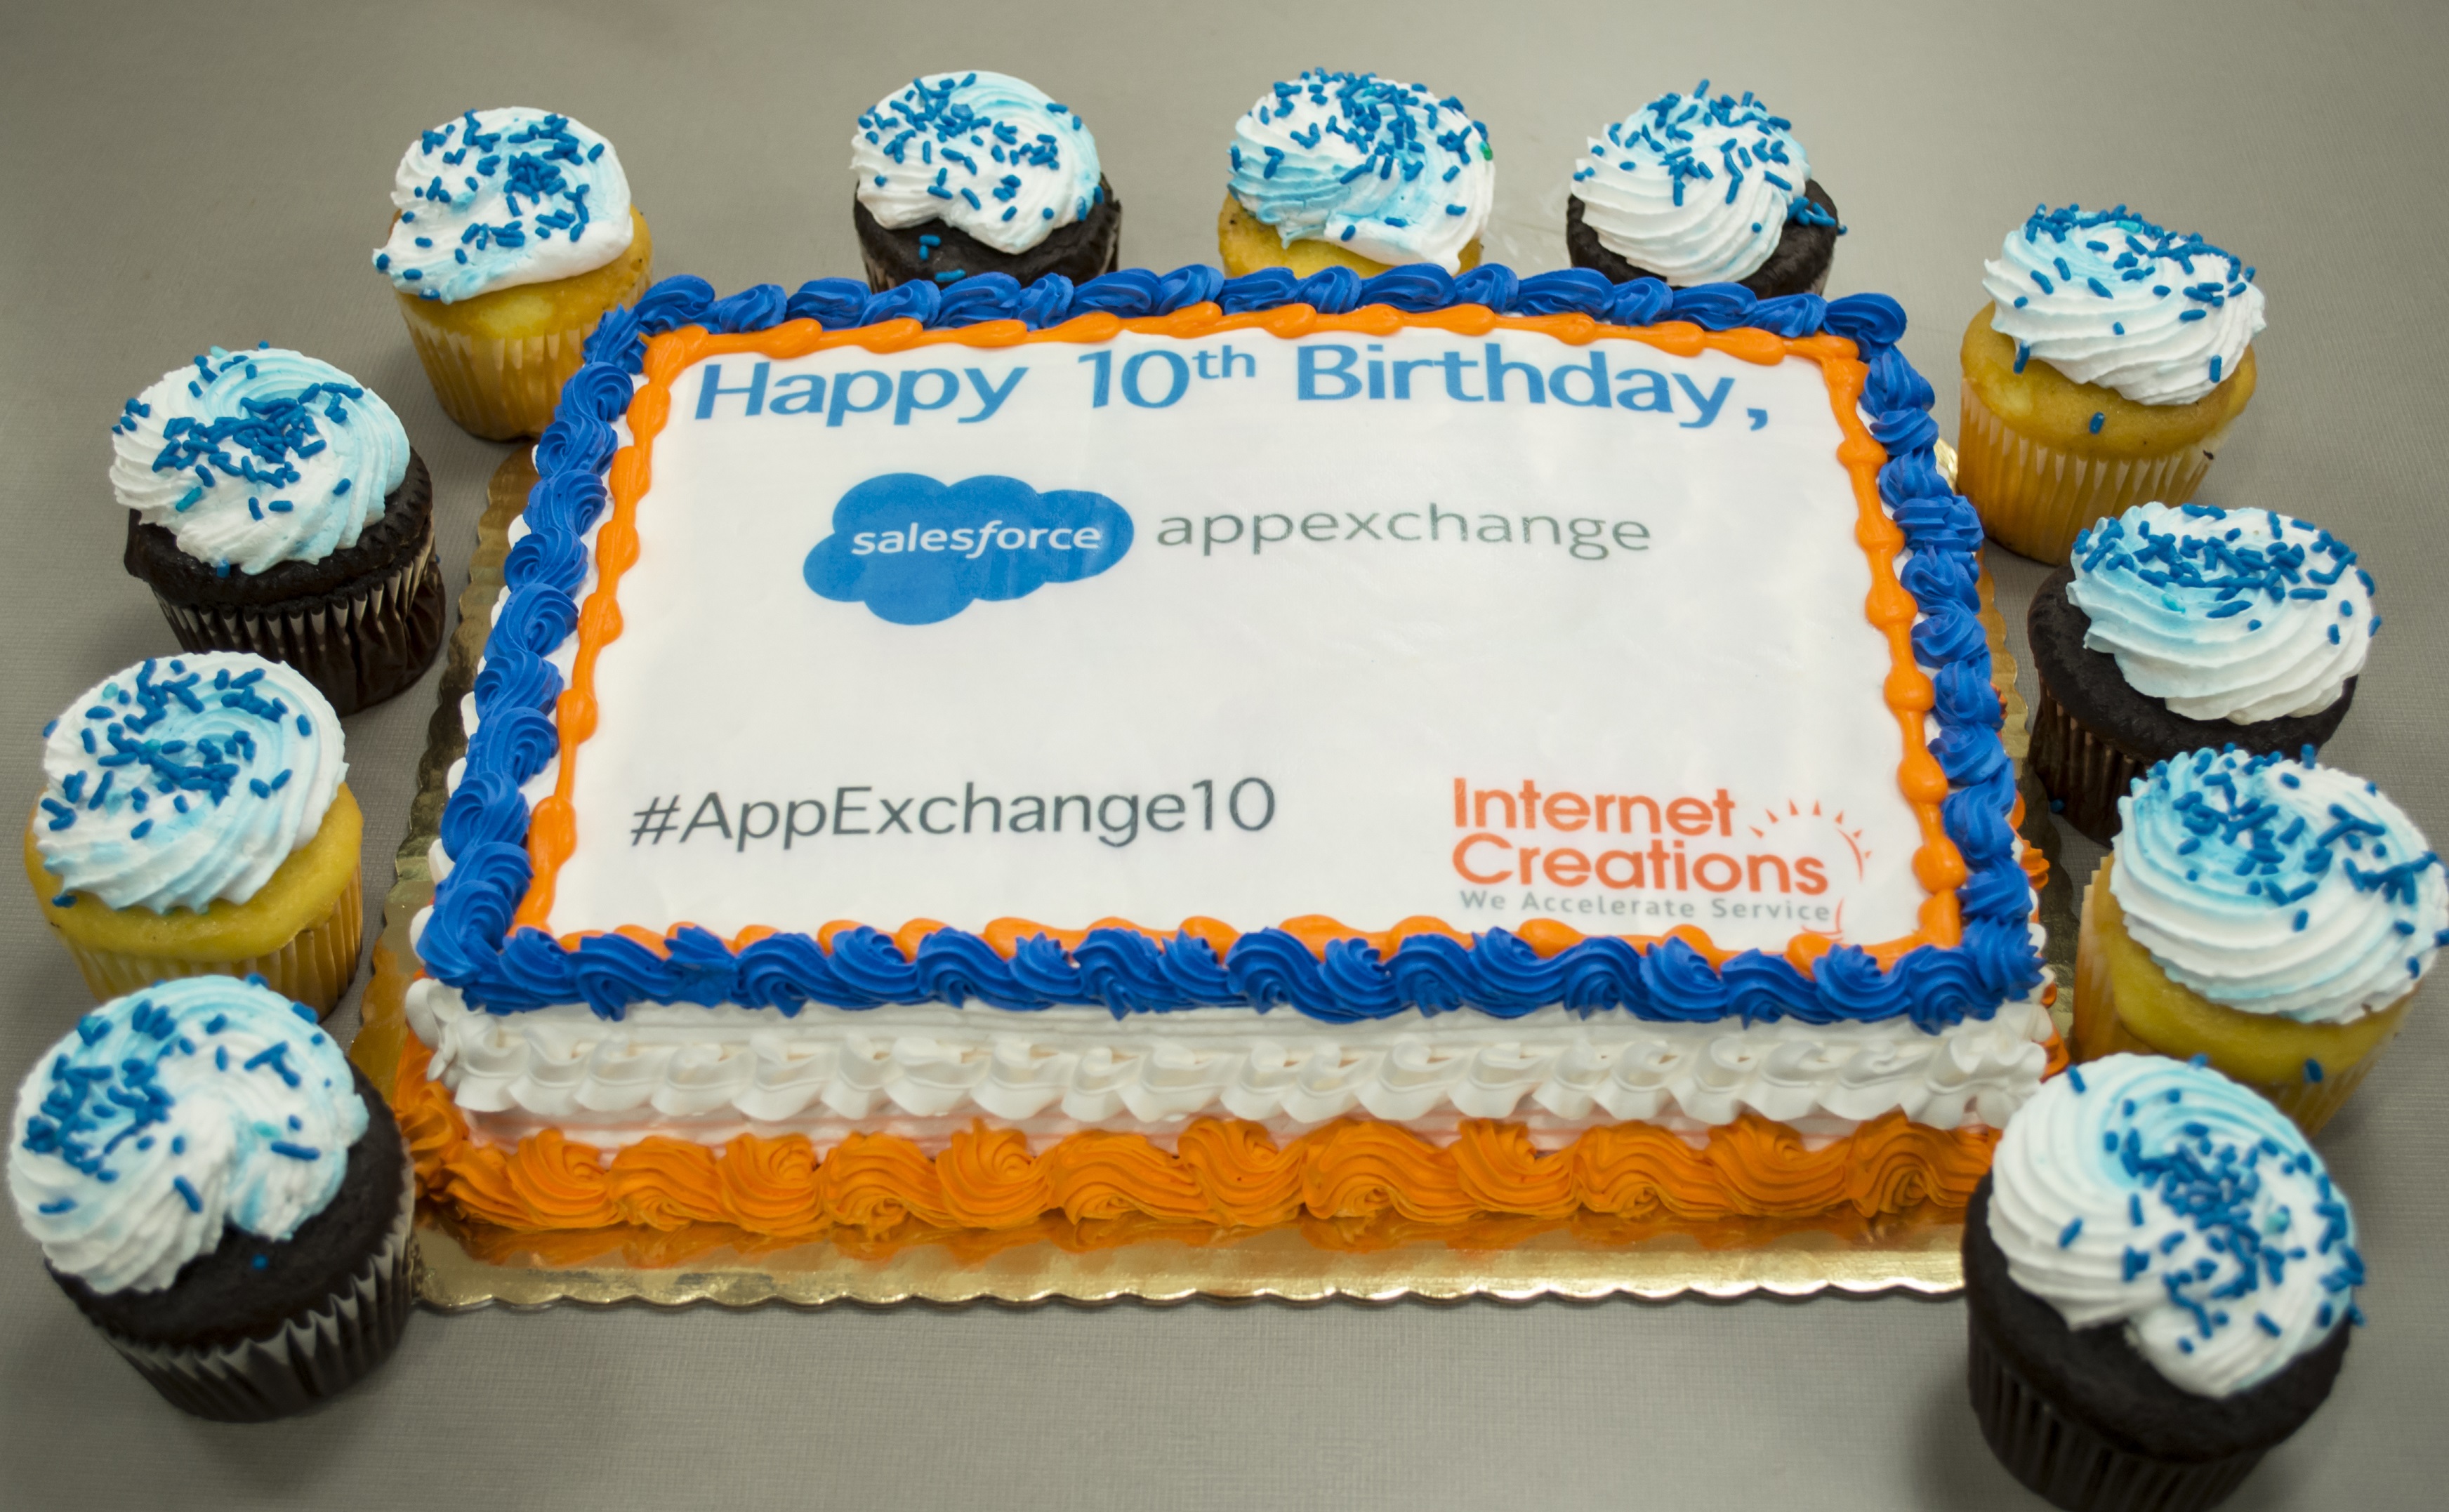 Internet Creations AppExchange 10 Cake